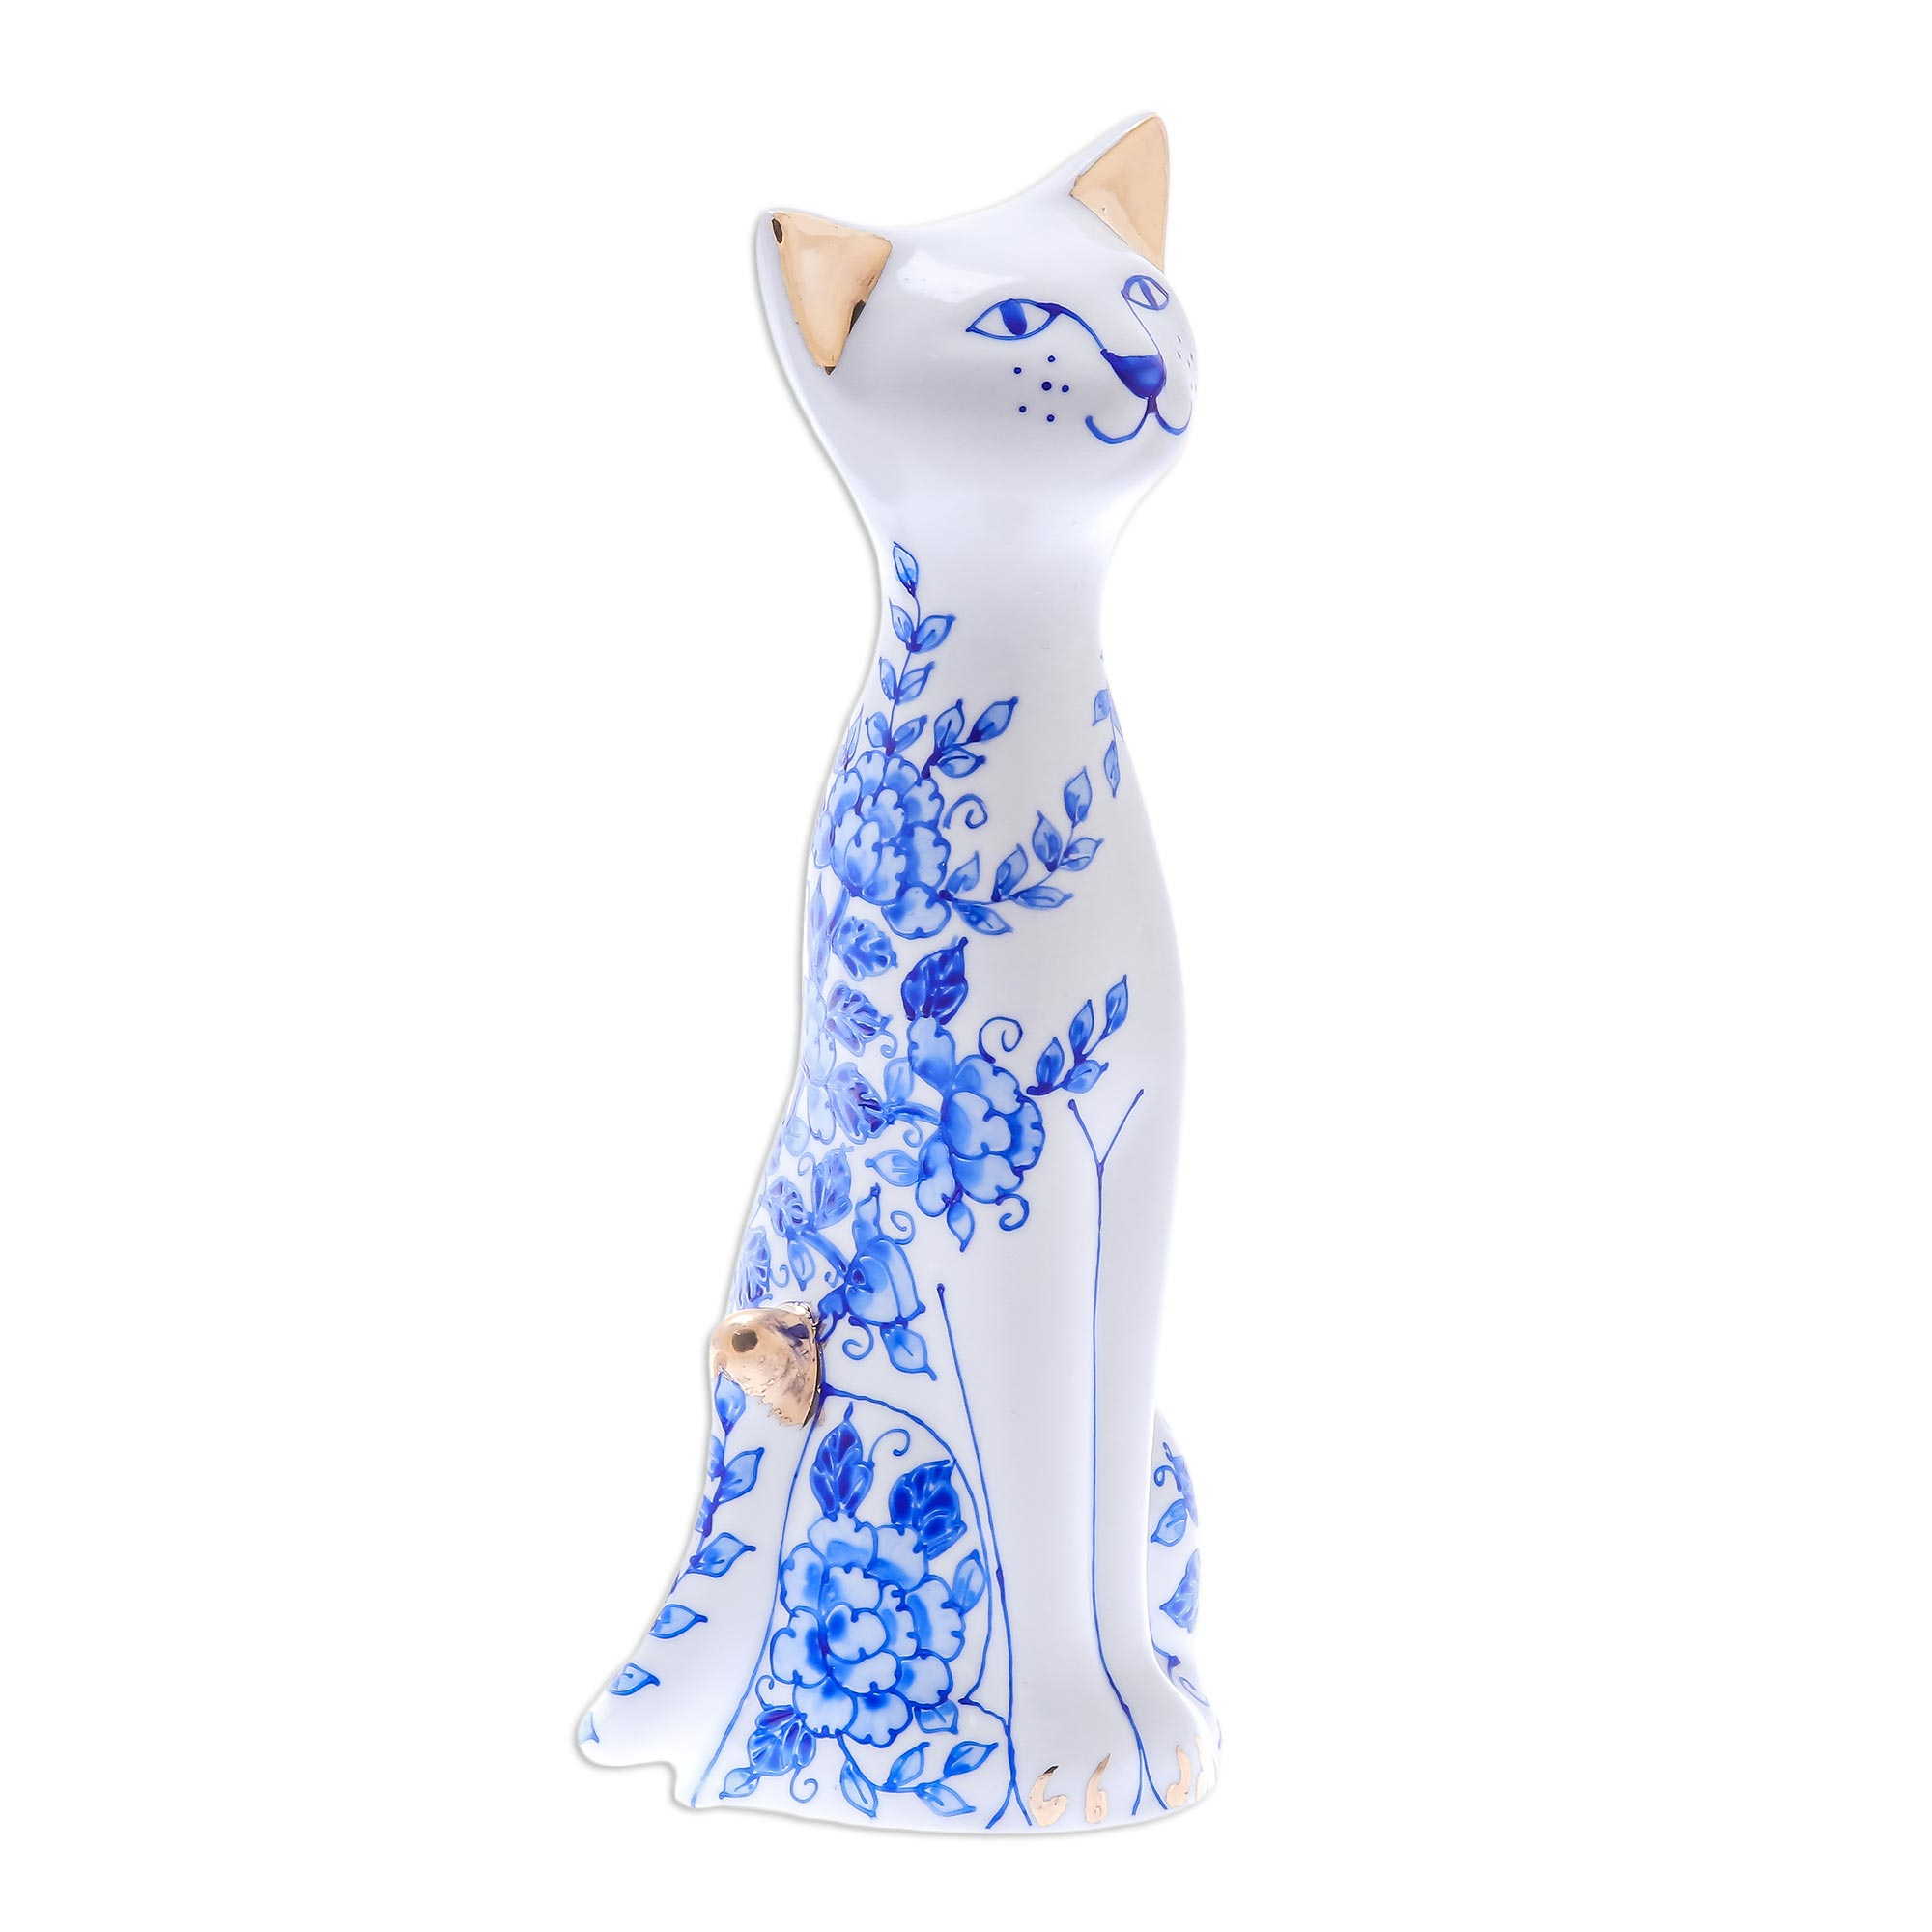 Download Unicef Market Floral Benjarong Porcelain Cat Statuette 7 5 In Happy Floral Cat